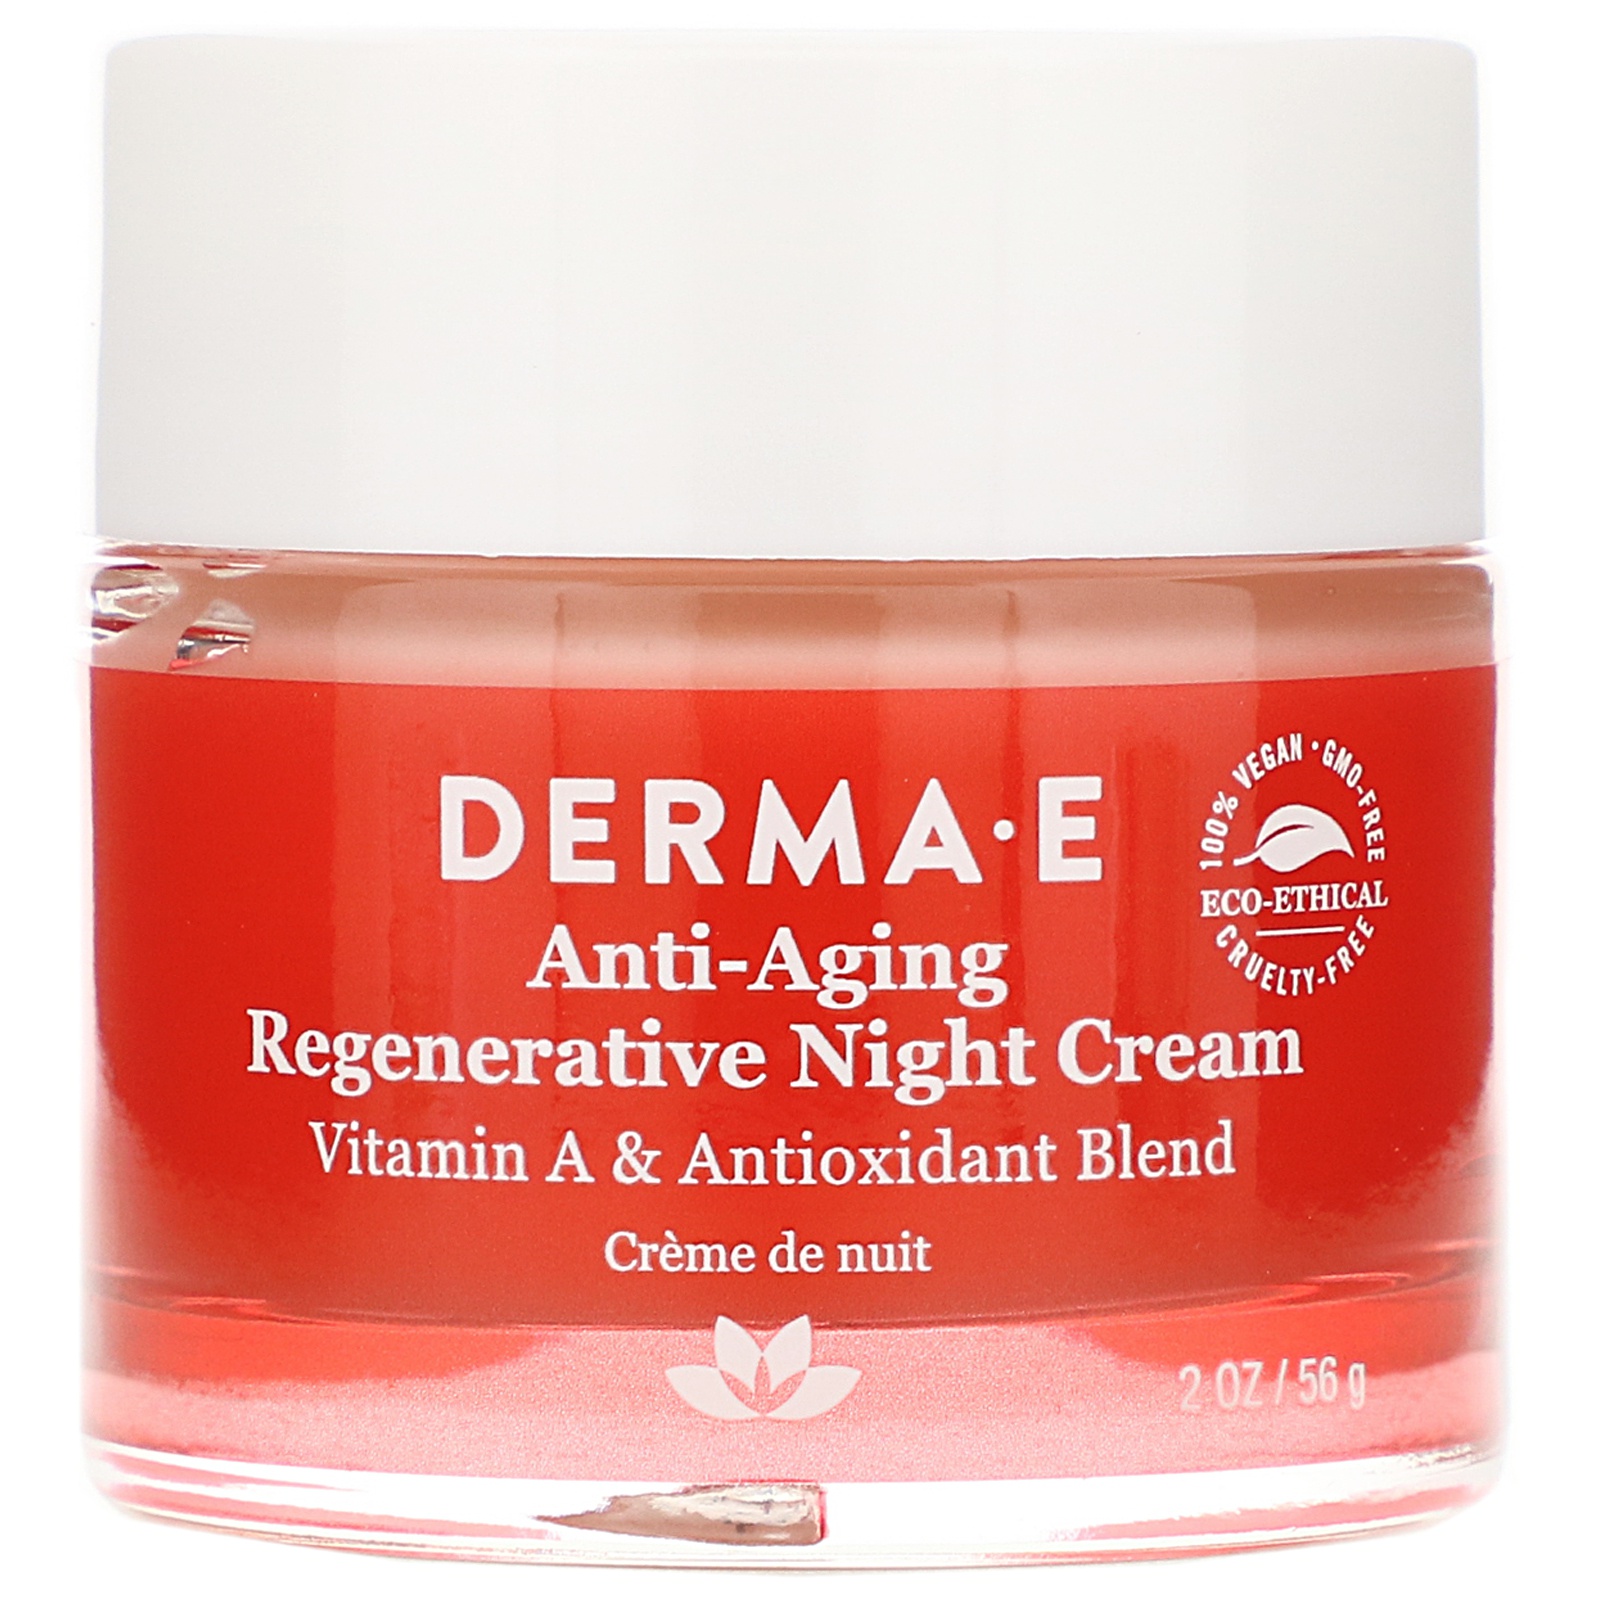 Derma E Anti-aging Regenerative Night Cream